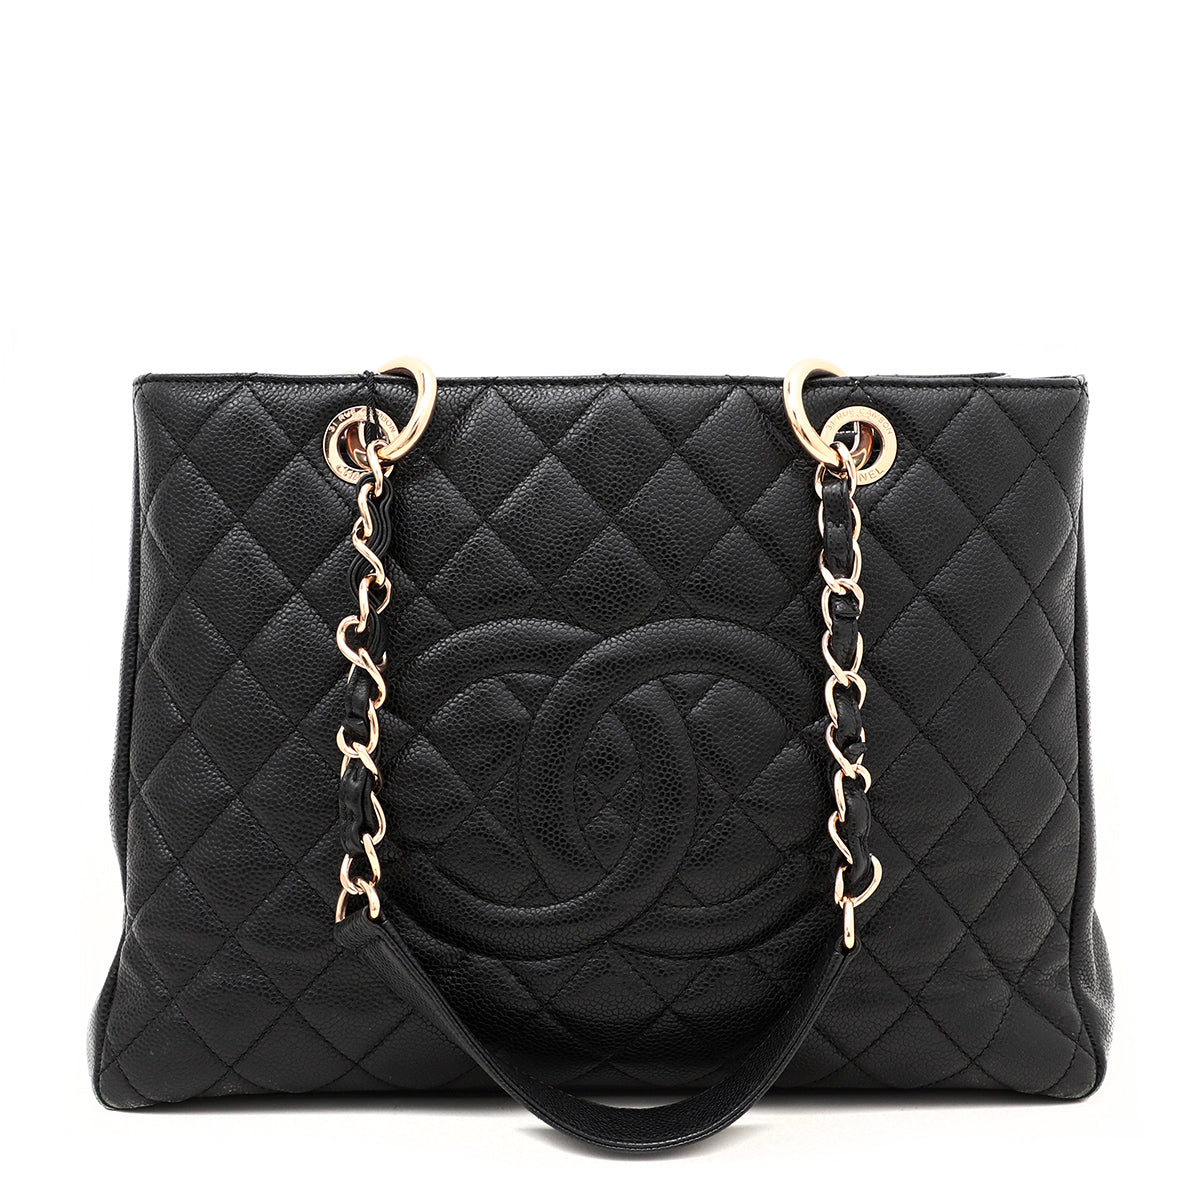 Chanel Black GST Tote Medium Bag